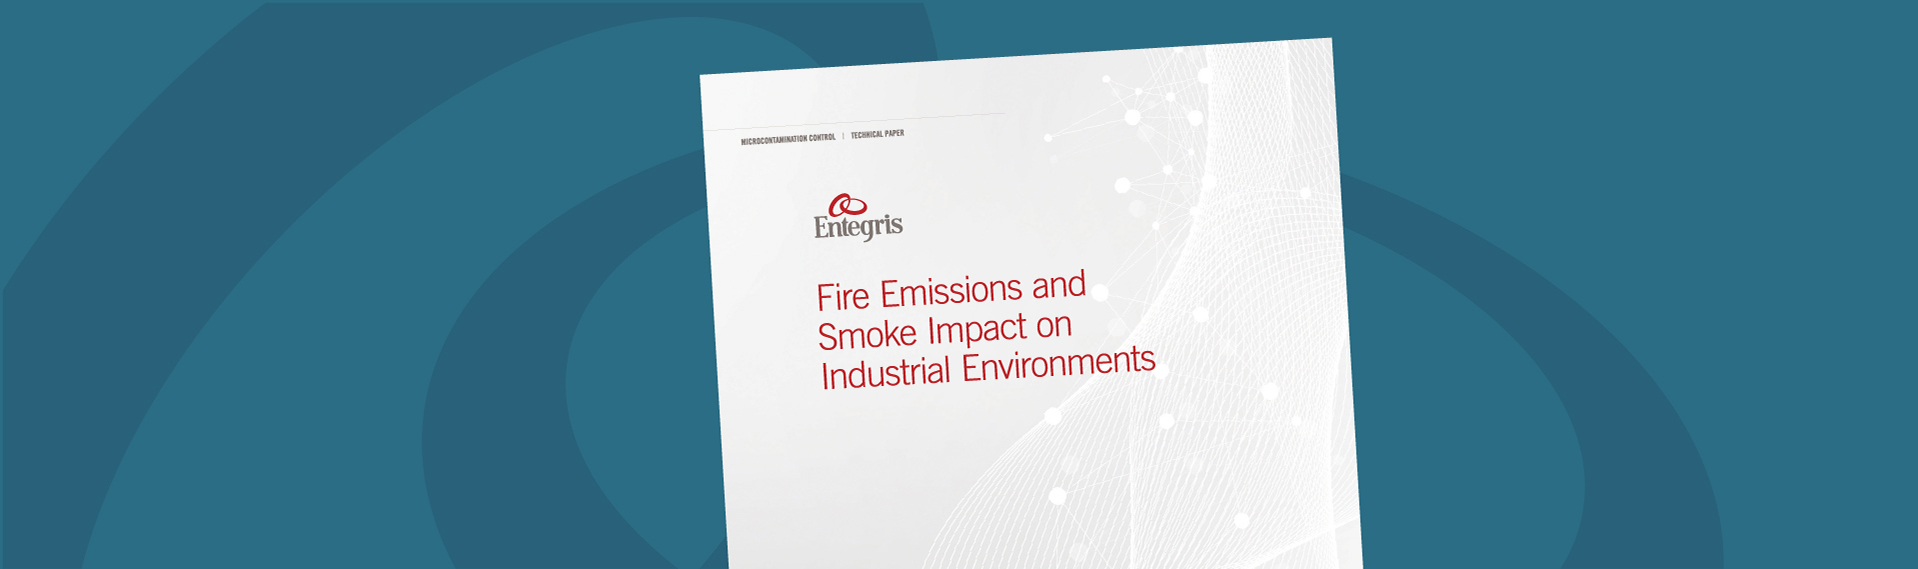 fire-emissions-and-smoke-impact-tp-hubspot-11441-desktop-1918x568